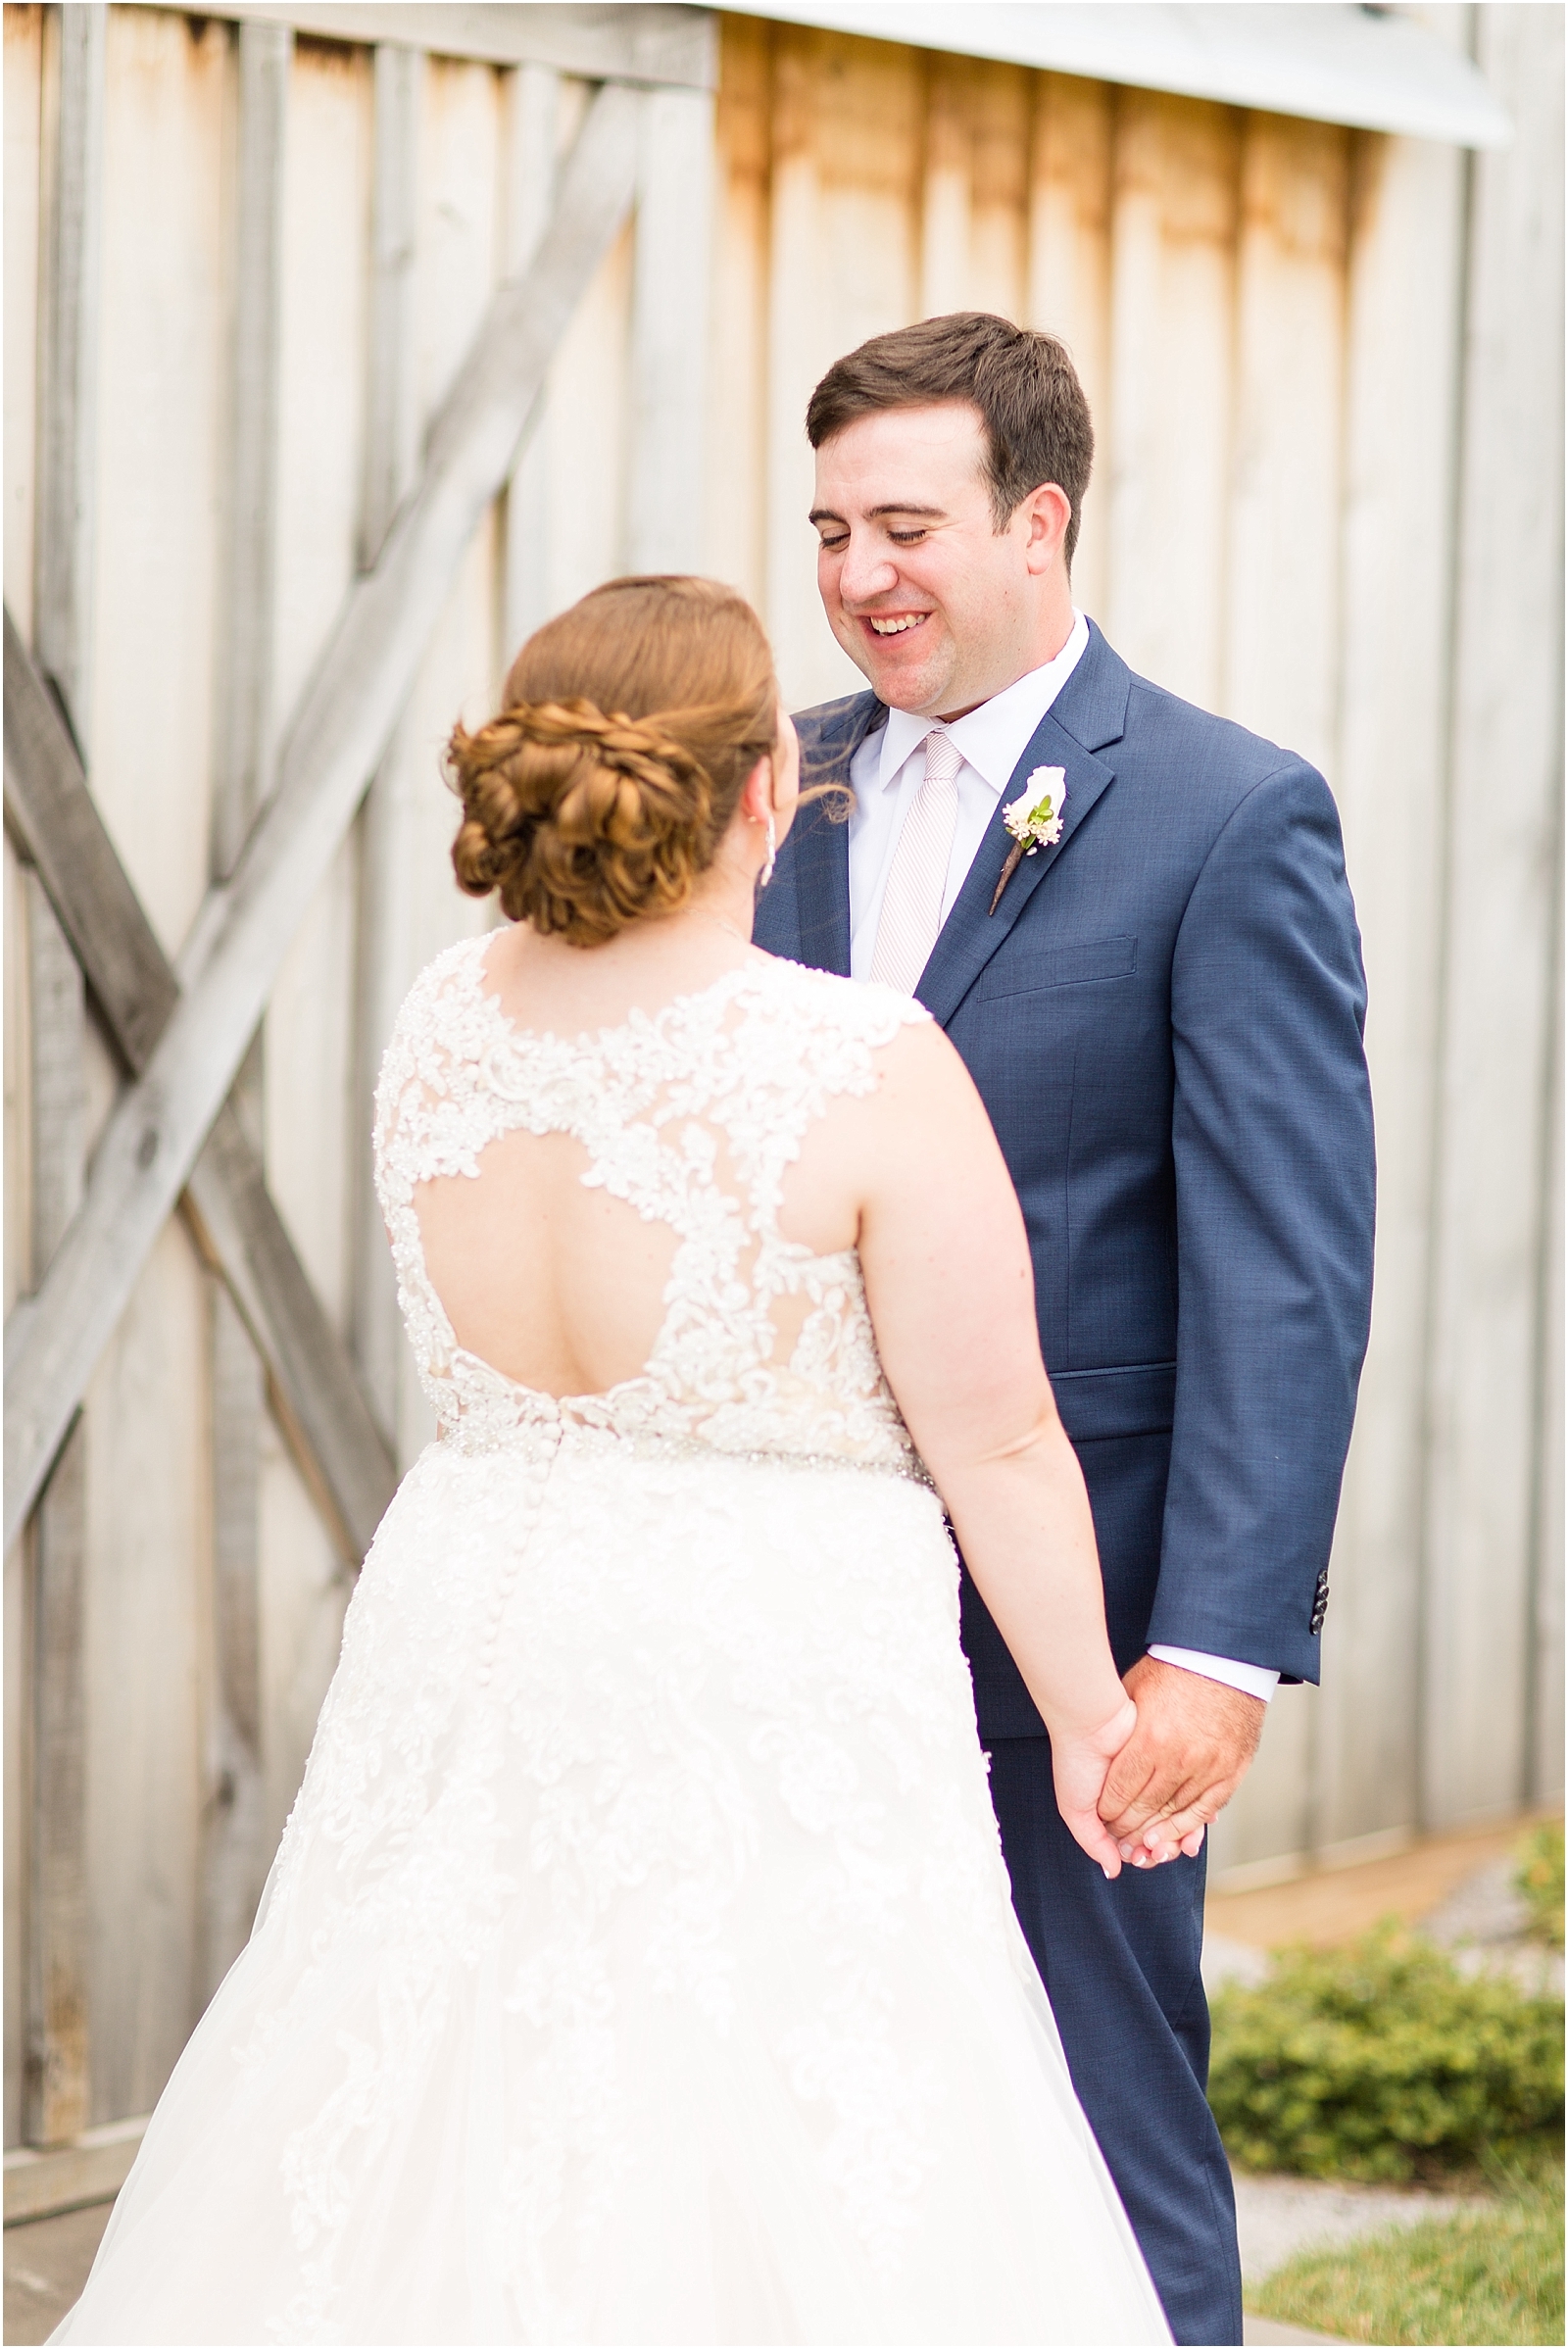 Rachel and Michael | Bret and Brandie Photography | Evansville Wedding Photographers 0029.jpg